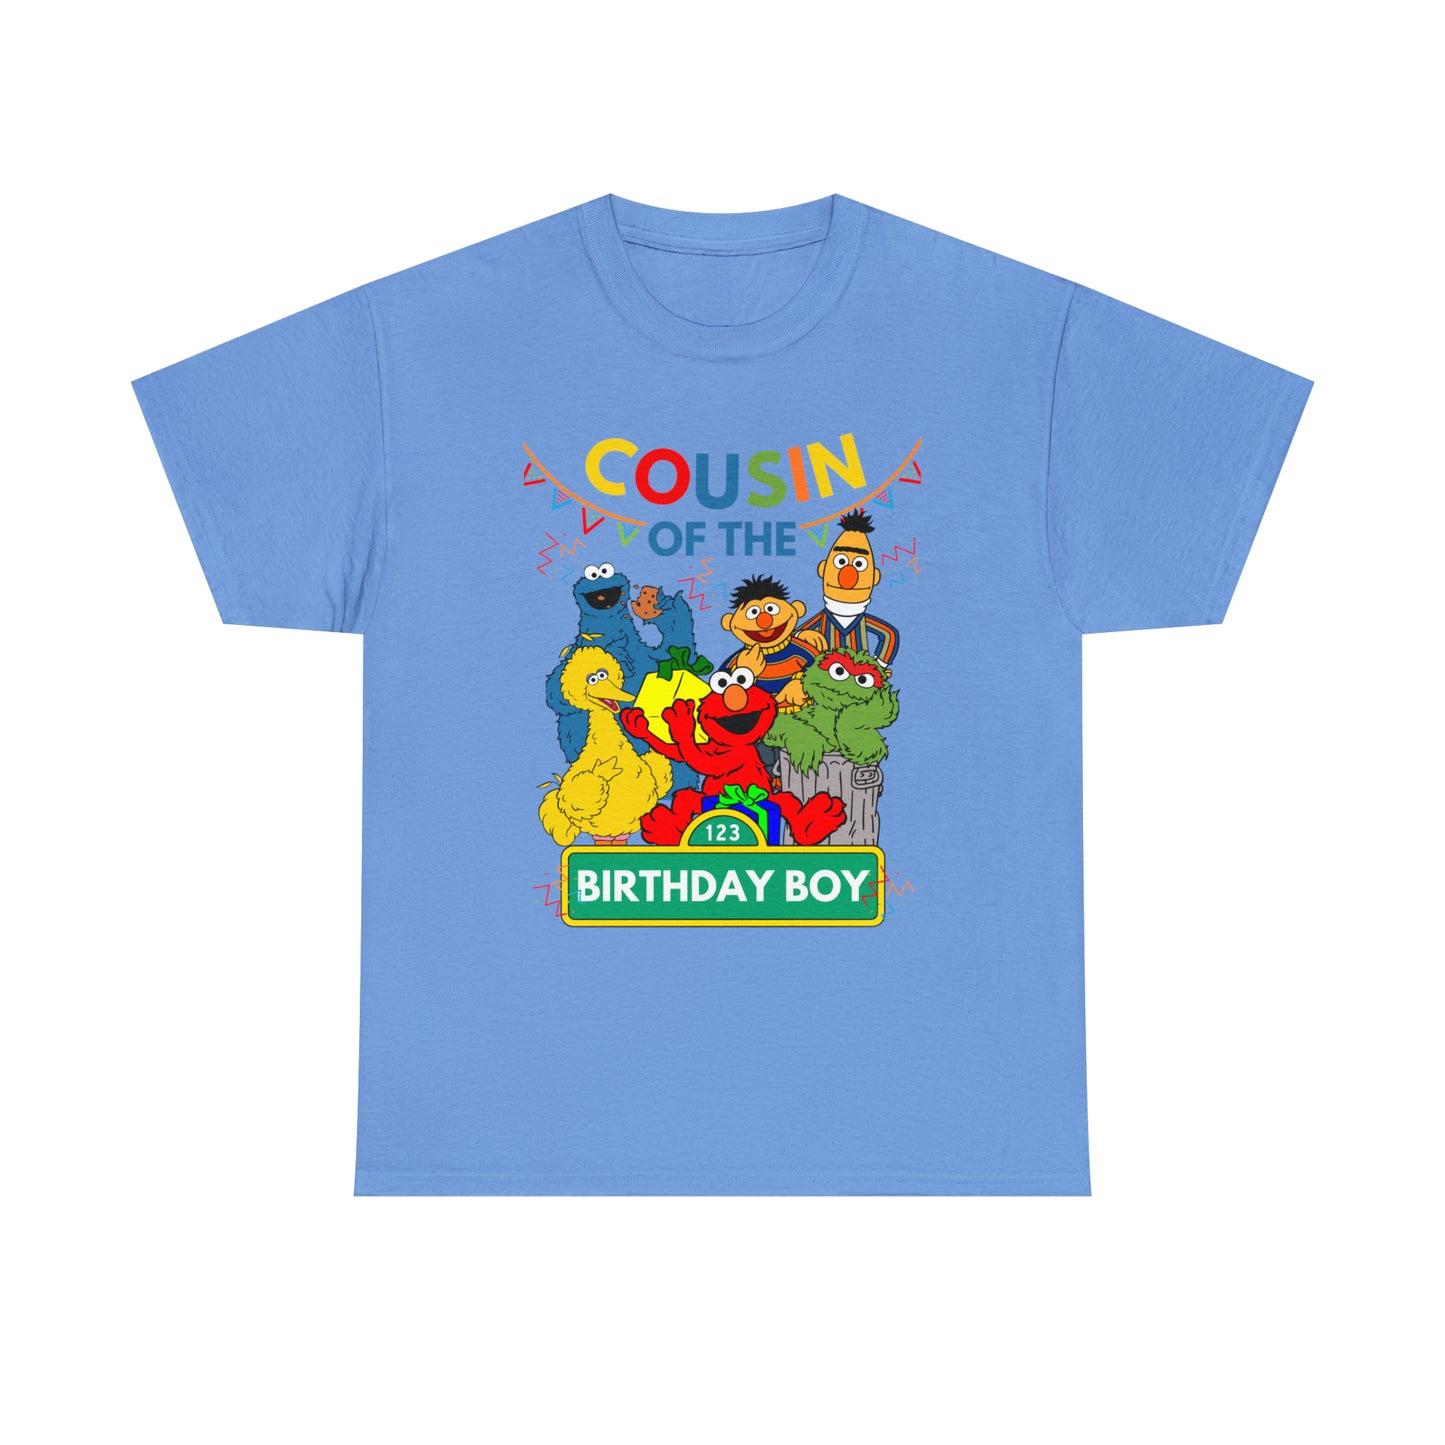 Sesame Street / Elmo / Birthday Boy/ Cousin (Adult)